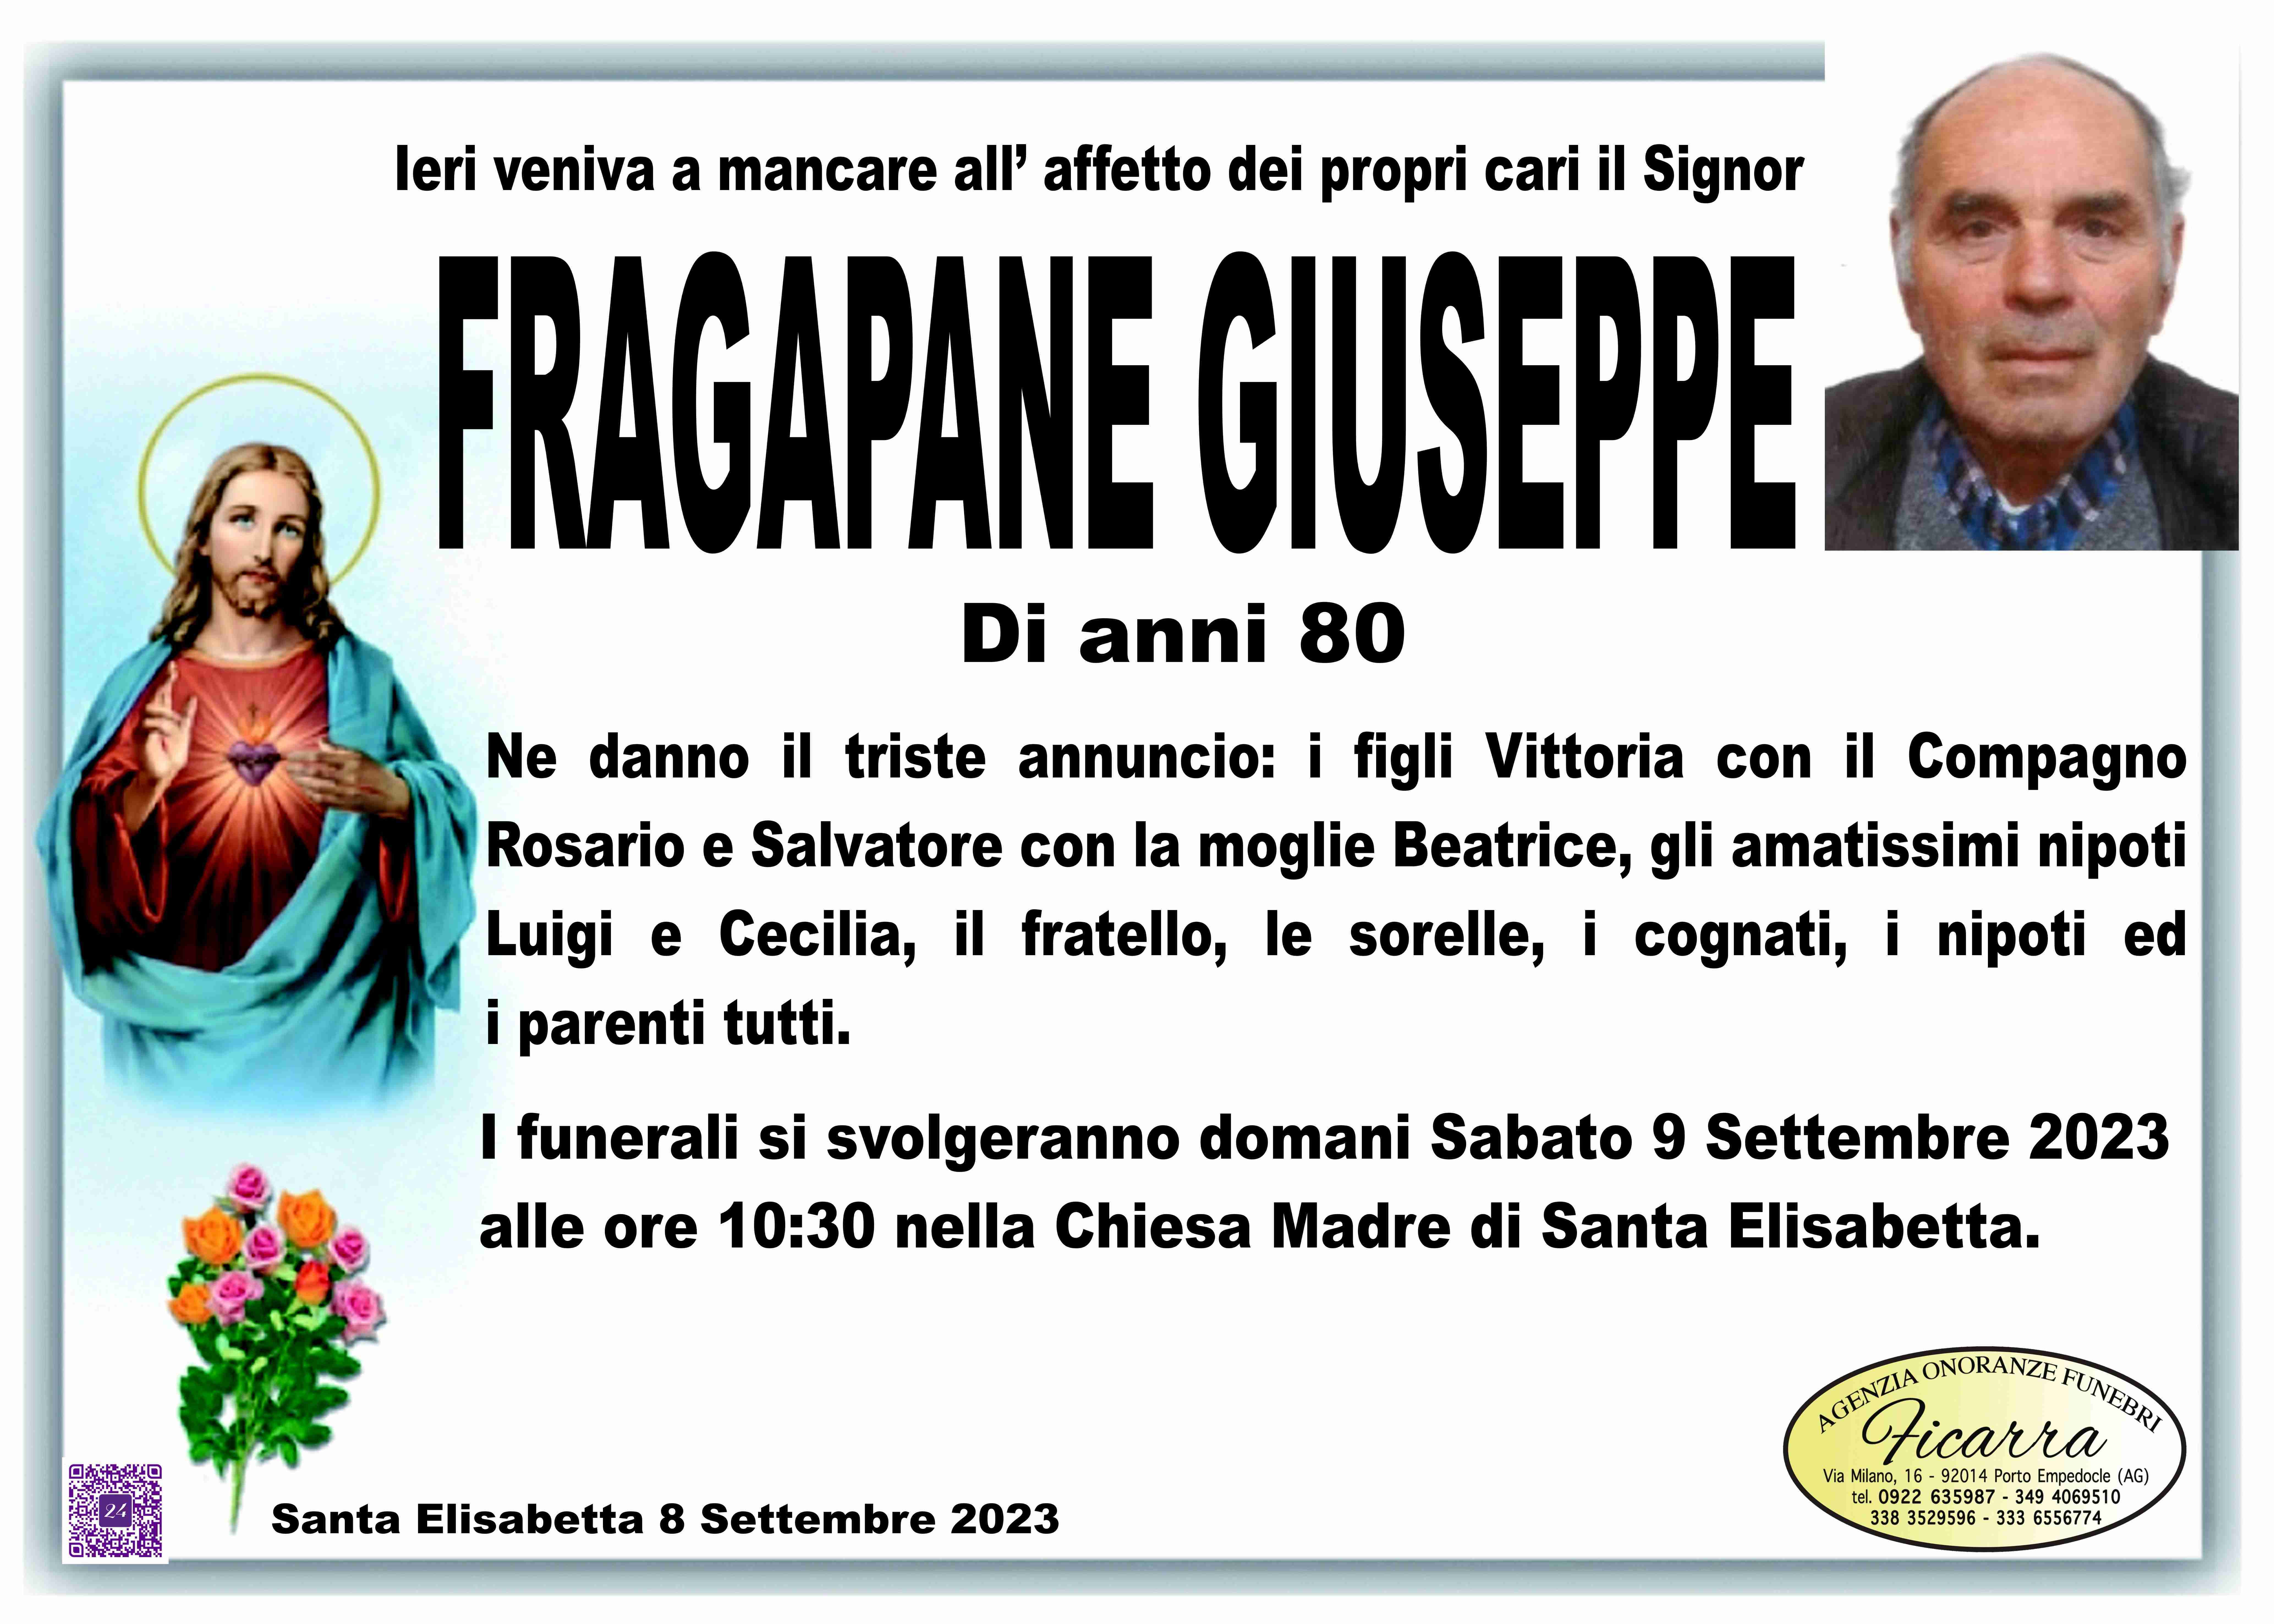 Giuseppe Fragapane